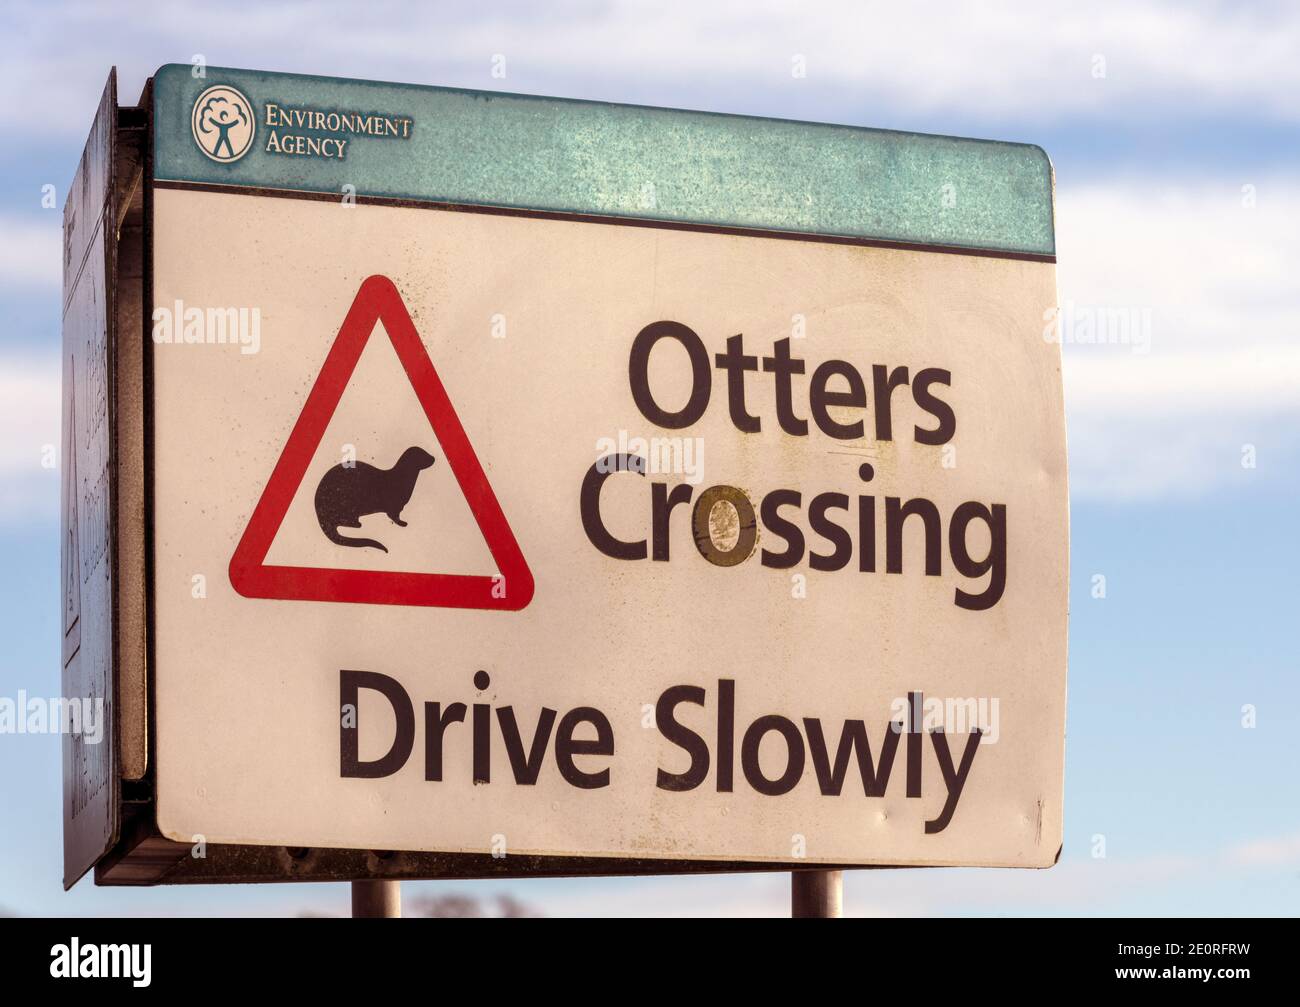 Ungewöhnliches Schild bei Lymington, Hampshire, England, UK - Otters Crossing Drive langsam Stockfoto